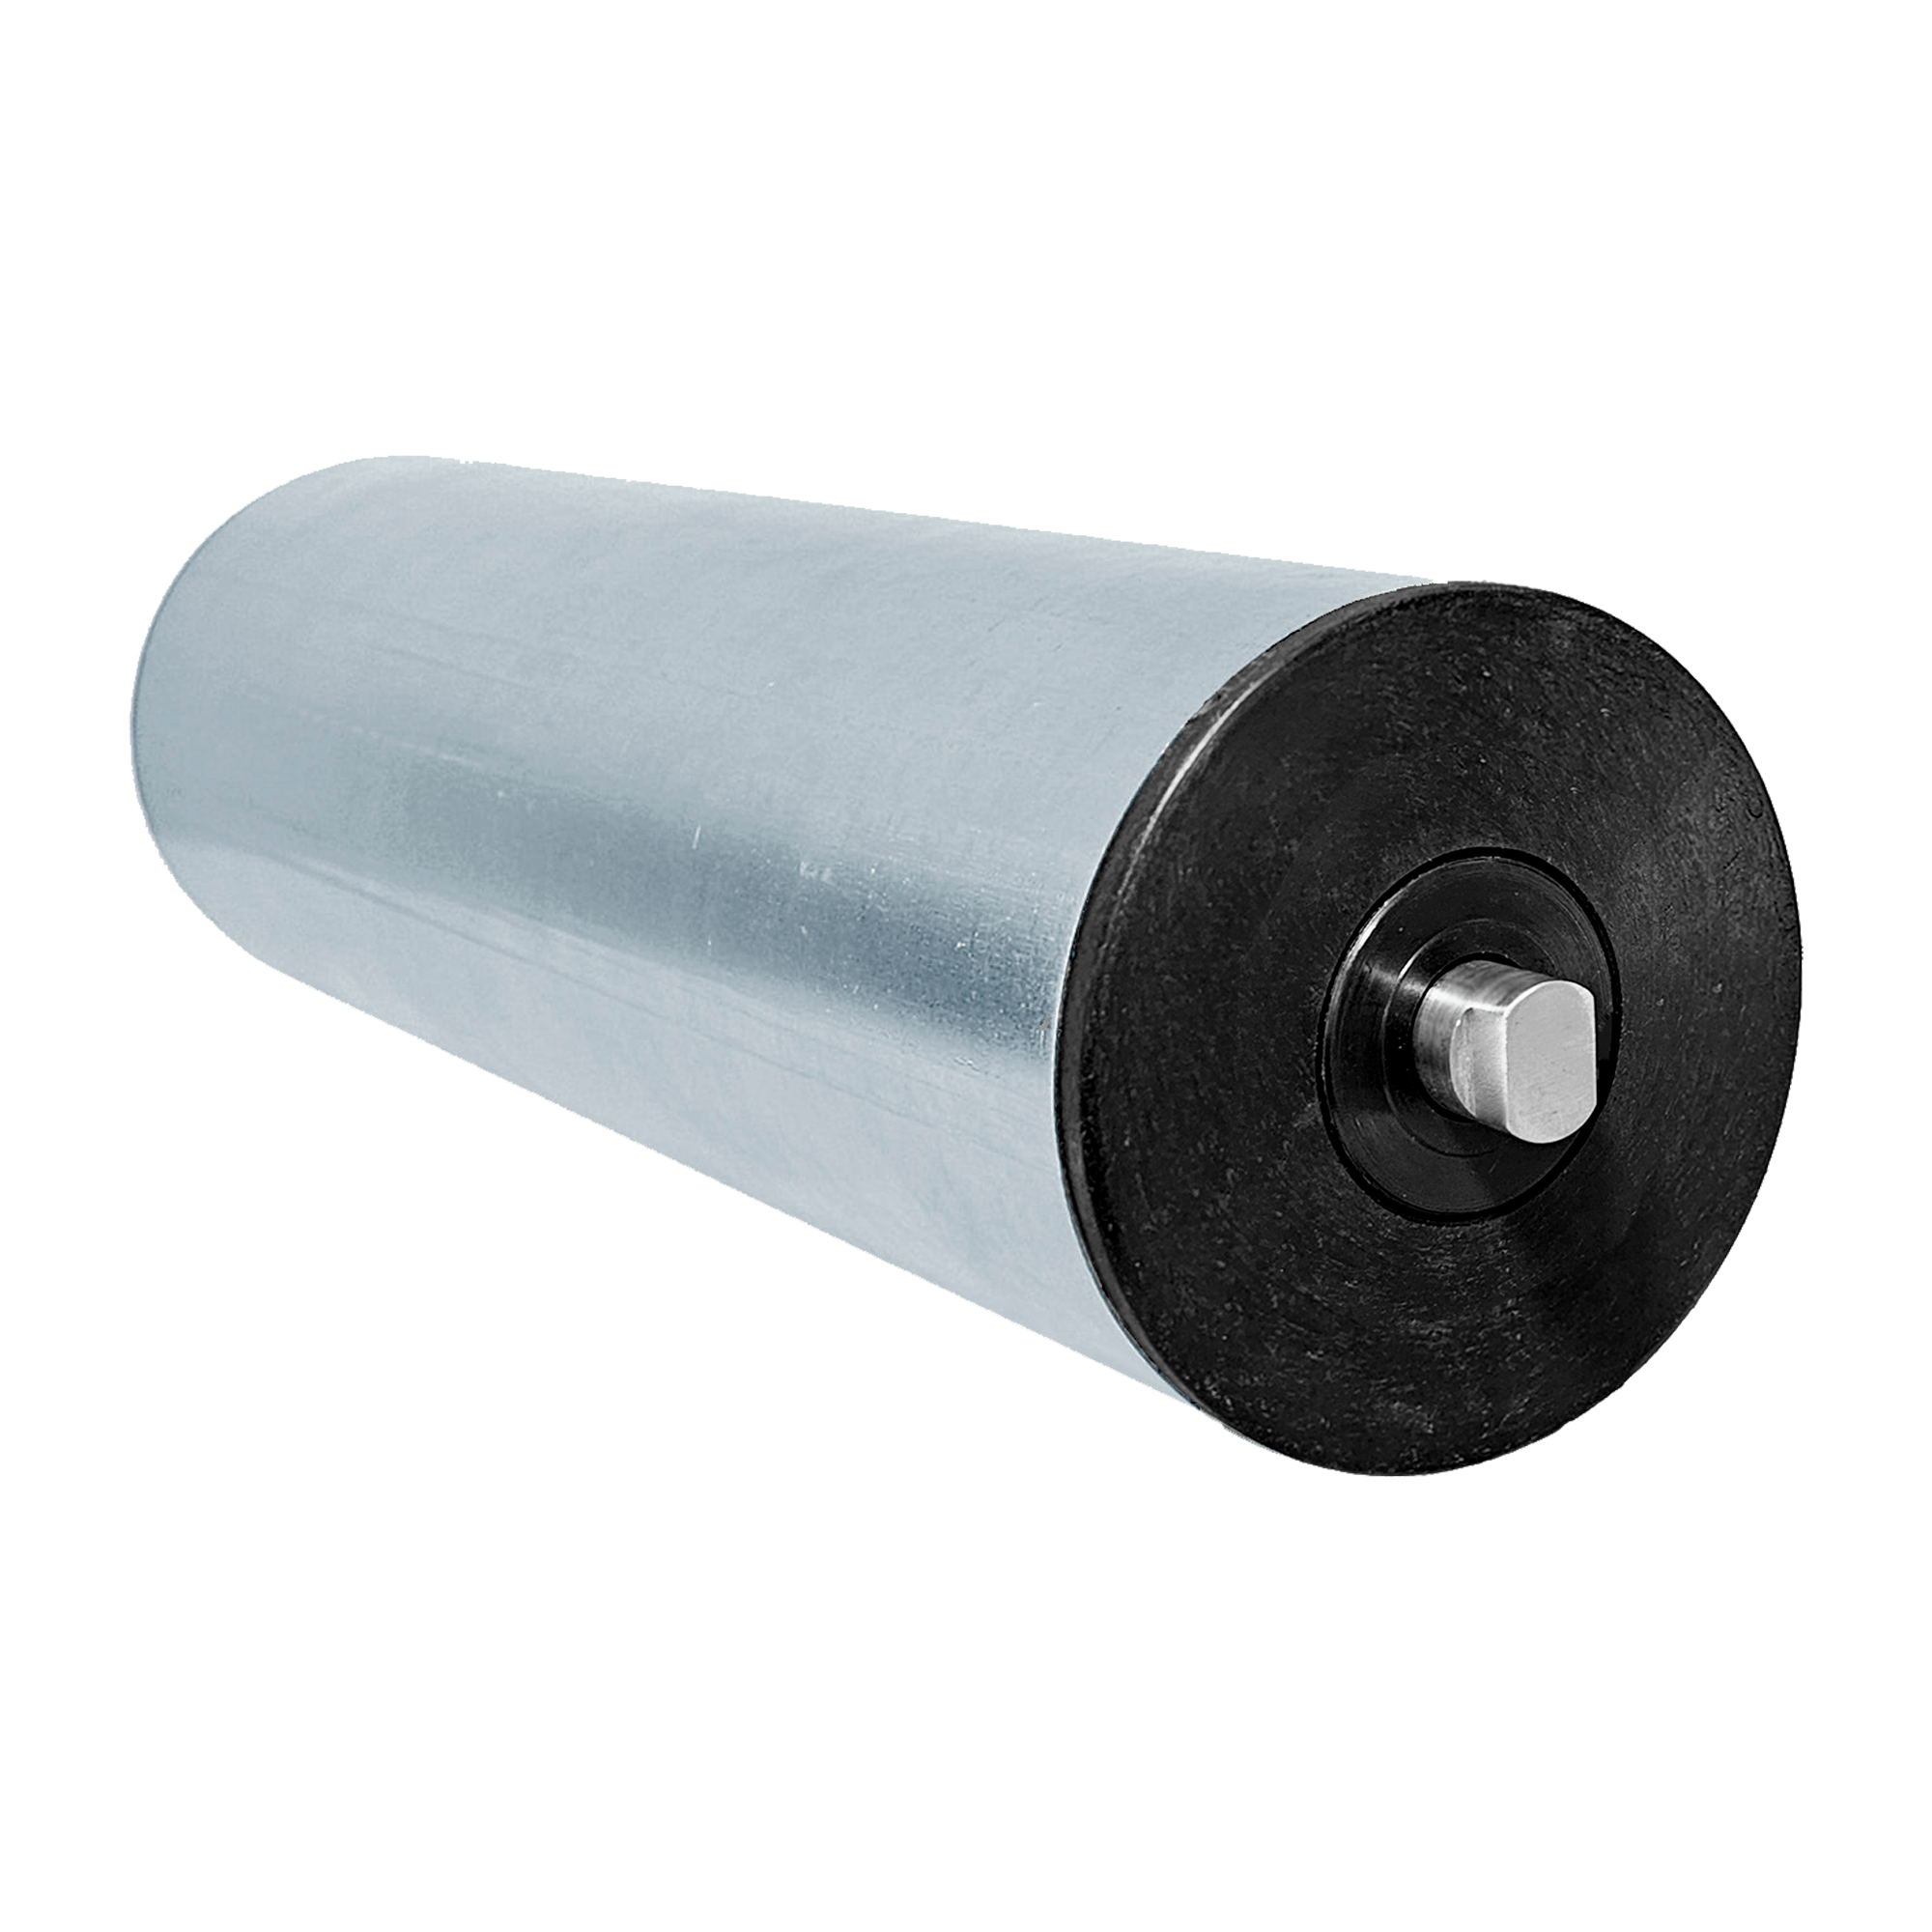 Rolete de Carga - Diâmetro tubo 101,6 mm - Comprimento tubo 250 mm